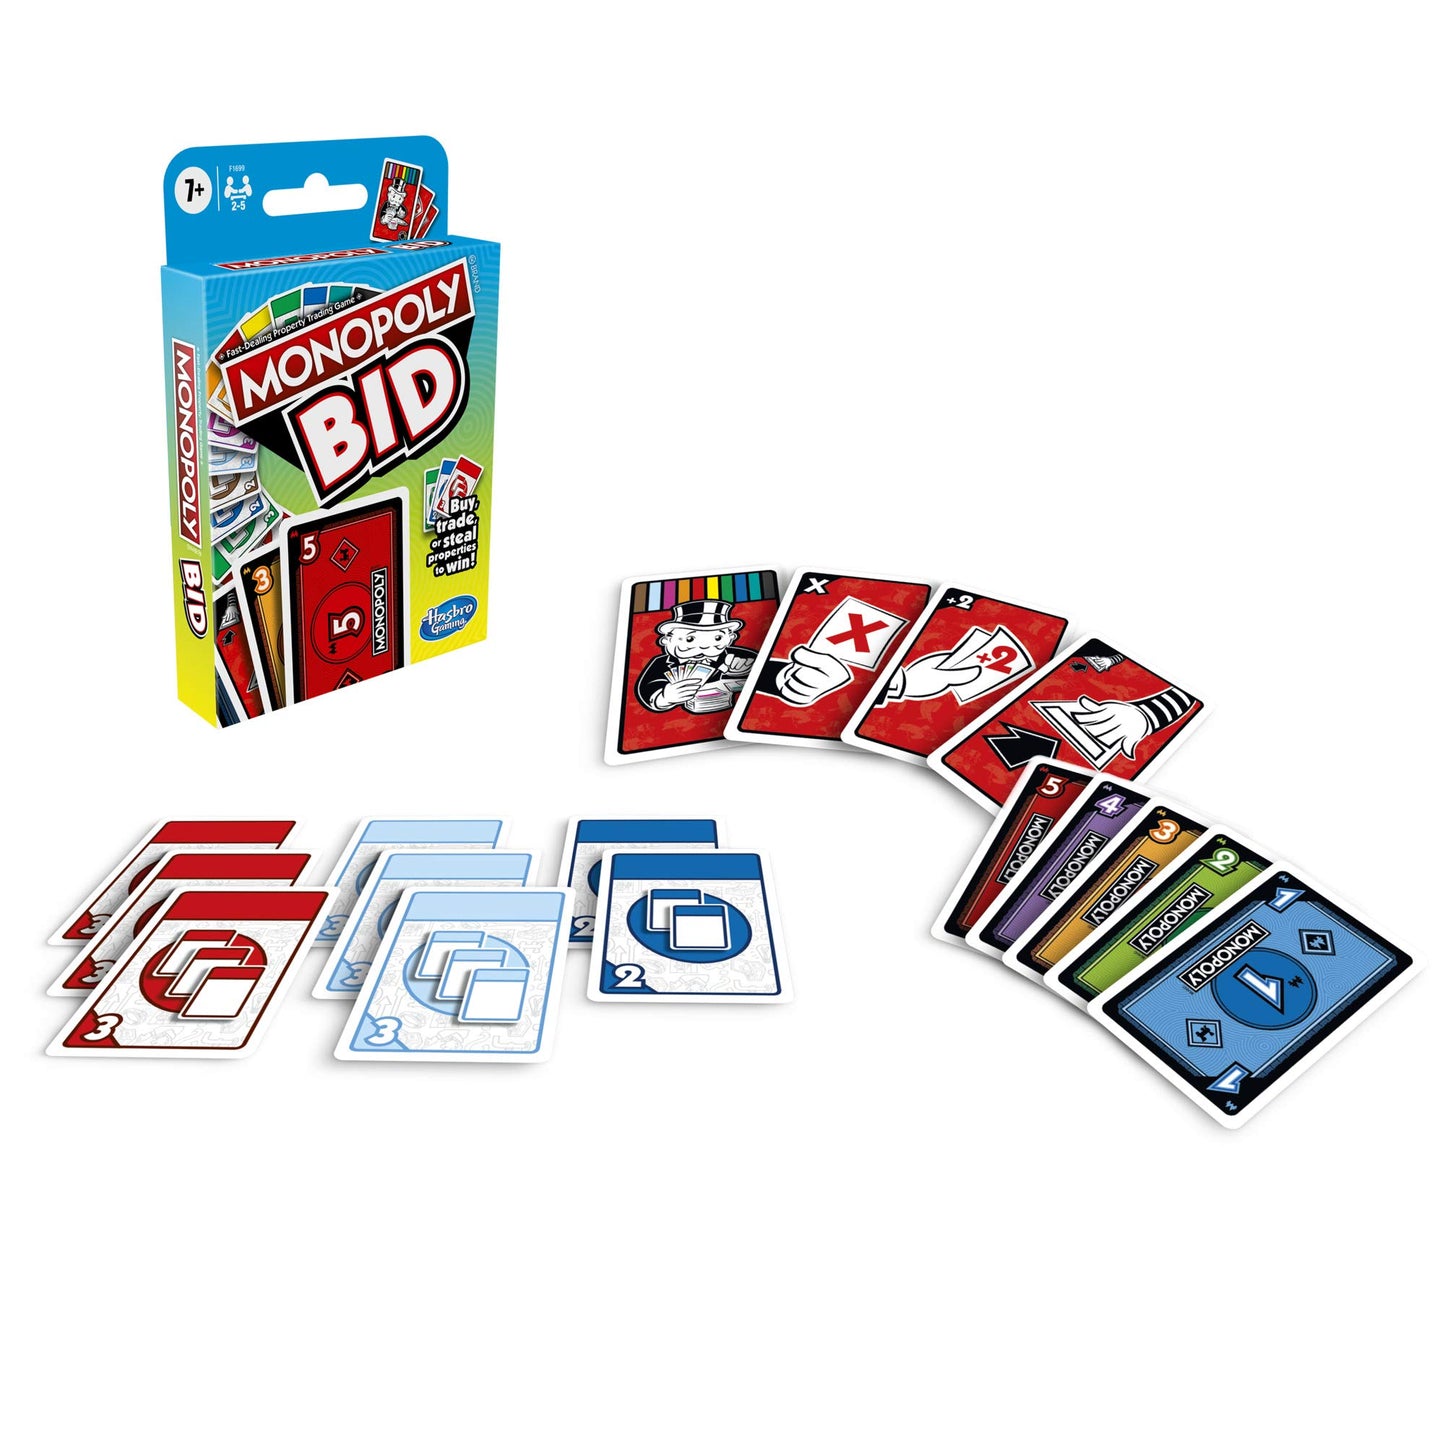 Monopoly Bid Card Game